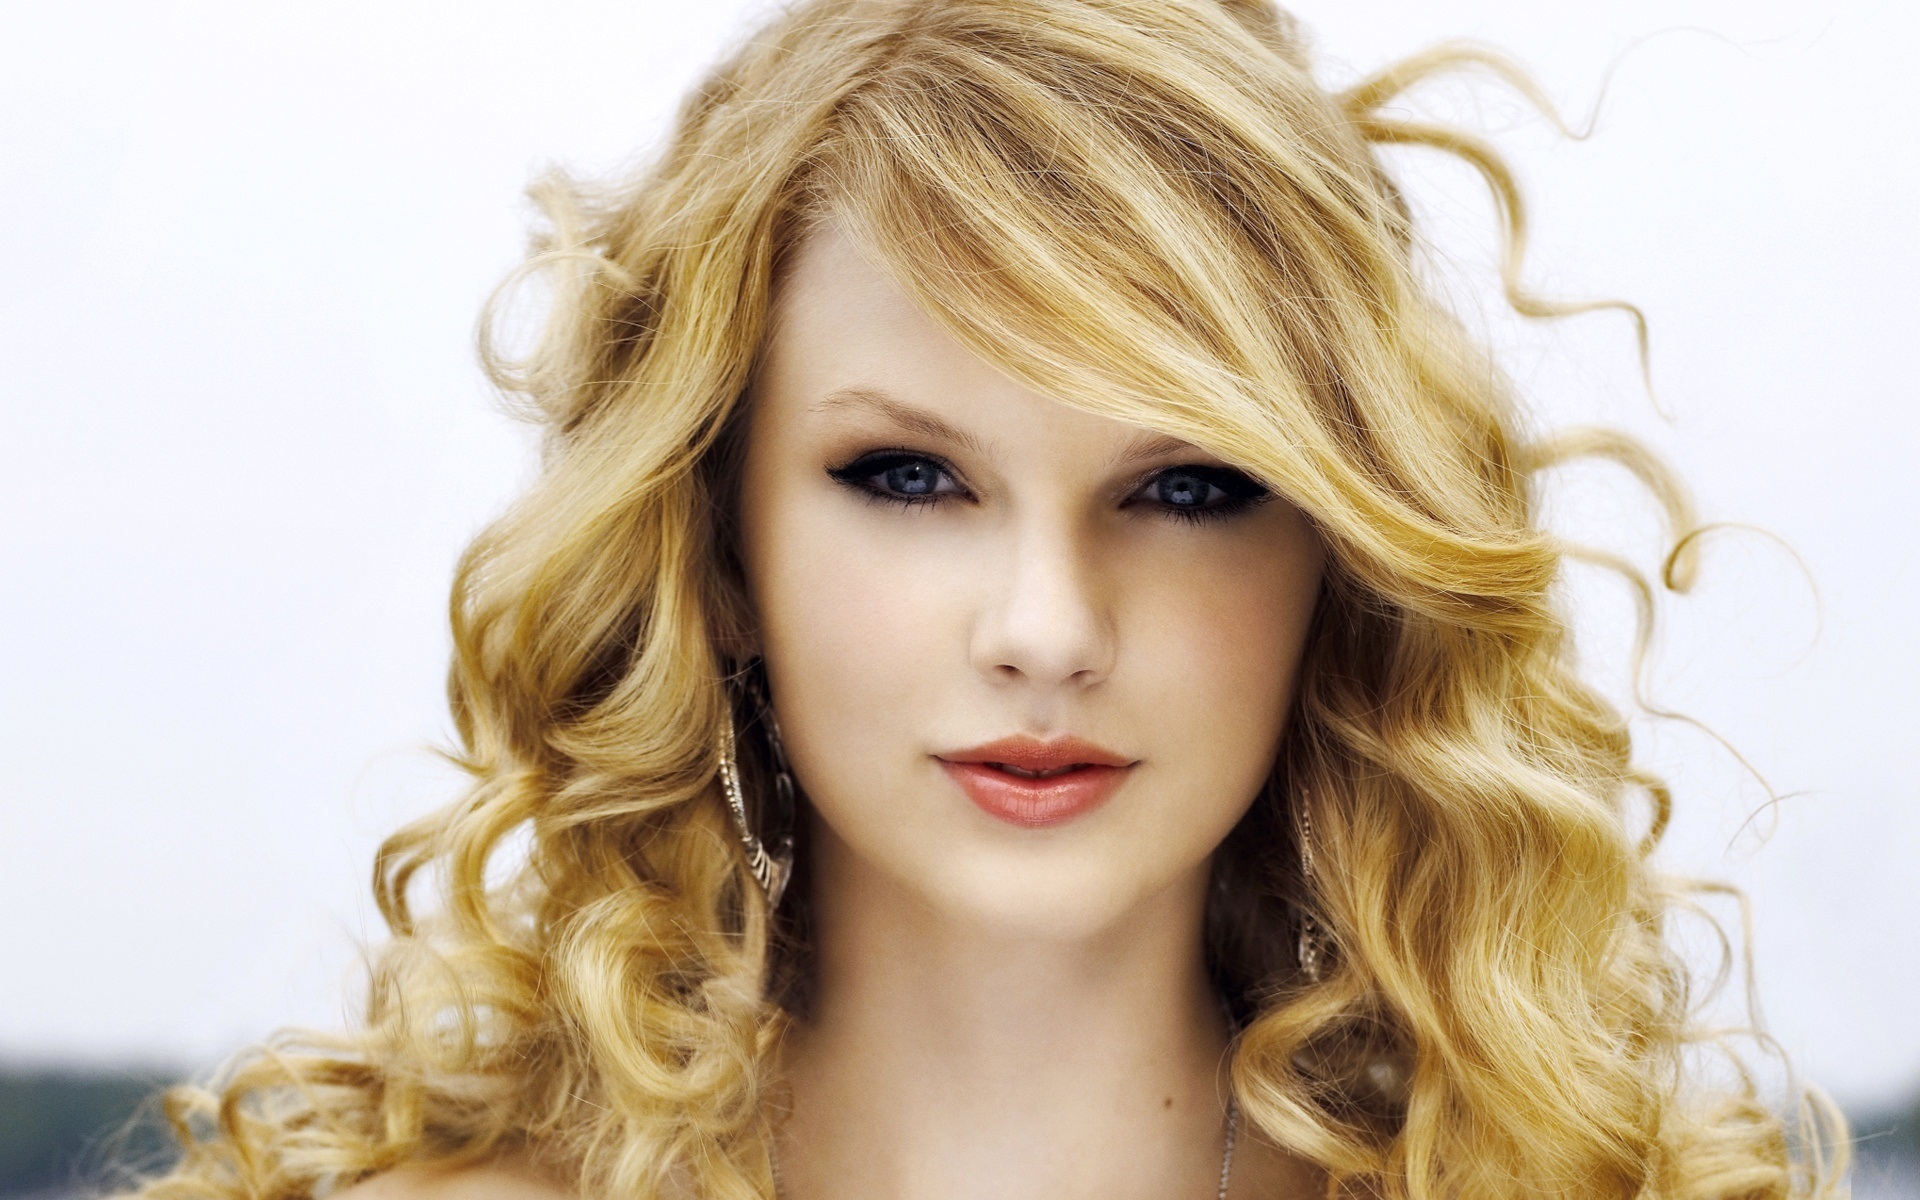 Taylor Swift Wallpaper Pictures Pics Photos Image Desktop